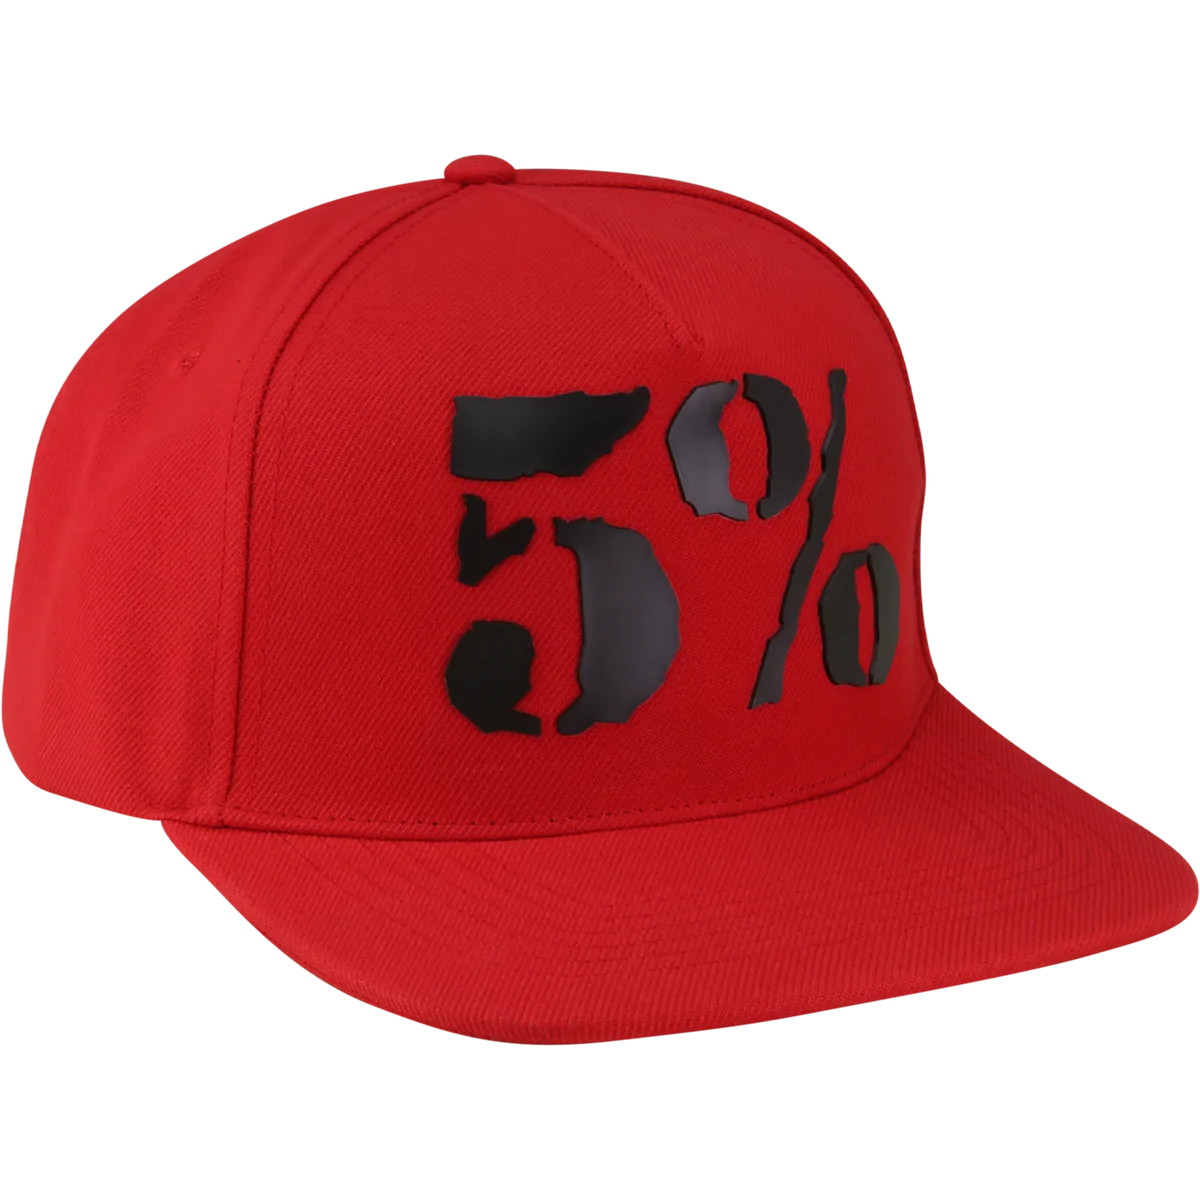 5% Nutrition Rubber Logo Cap - Rot